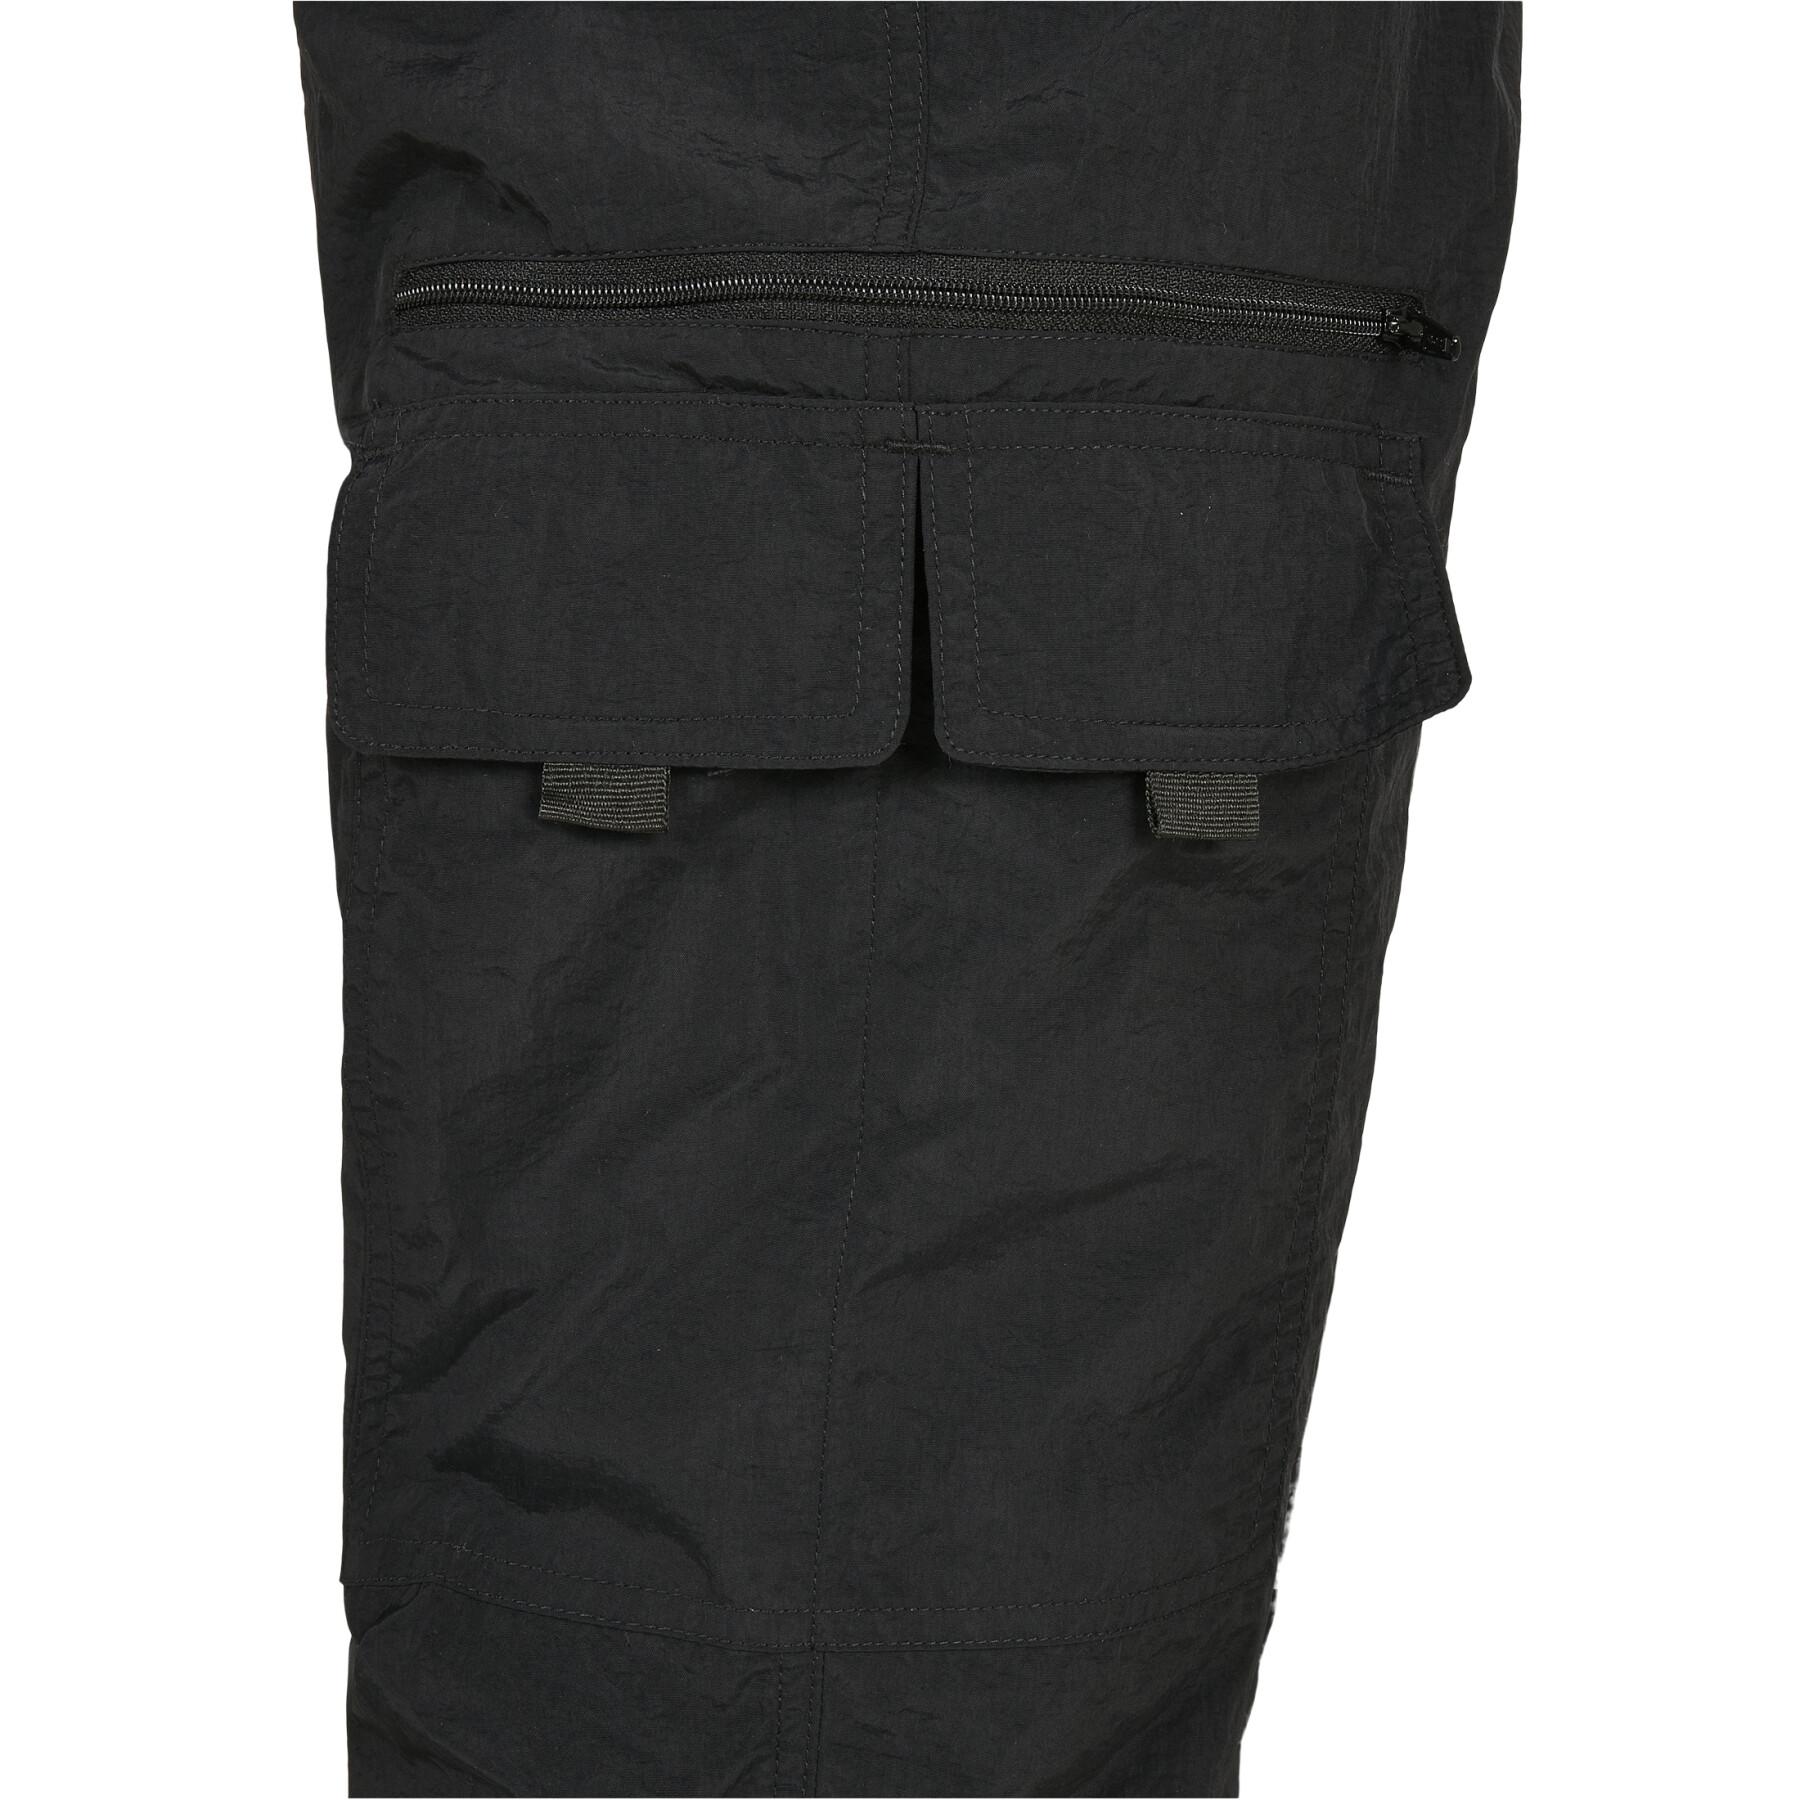 Spodnie Cargo Urban Classics adjustable nylon (Grandes tailles)